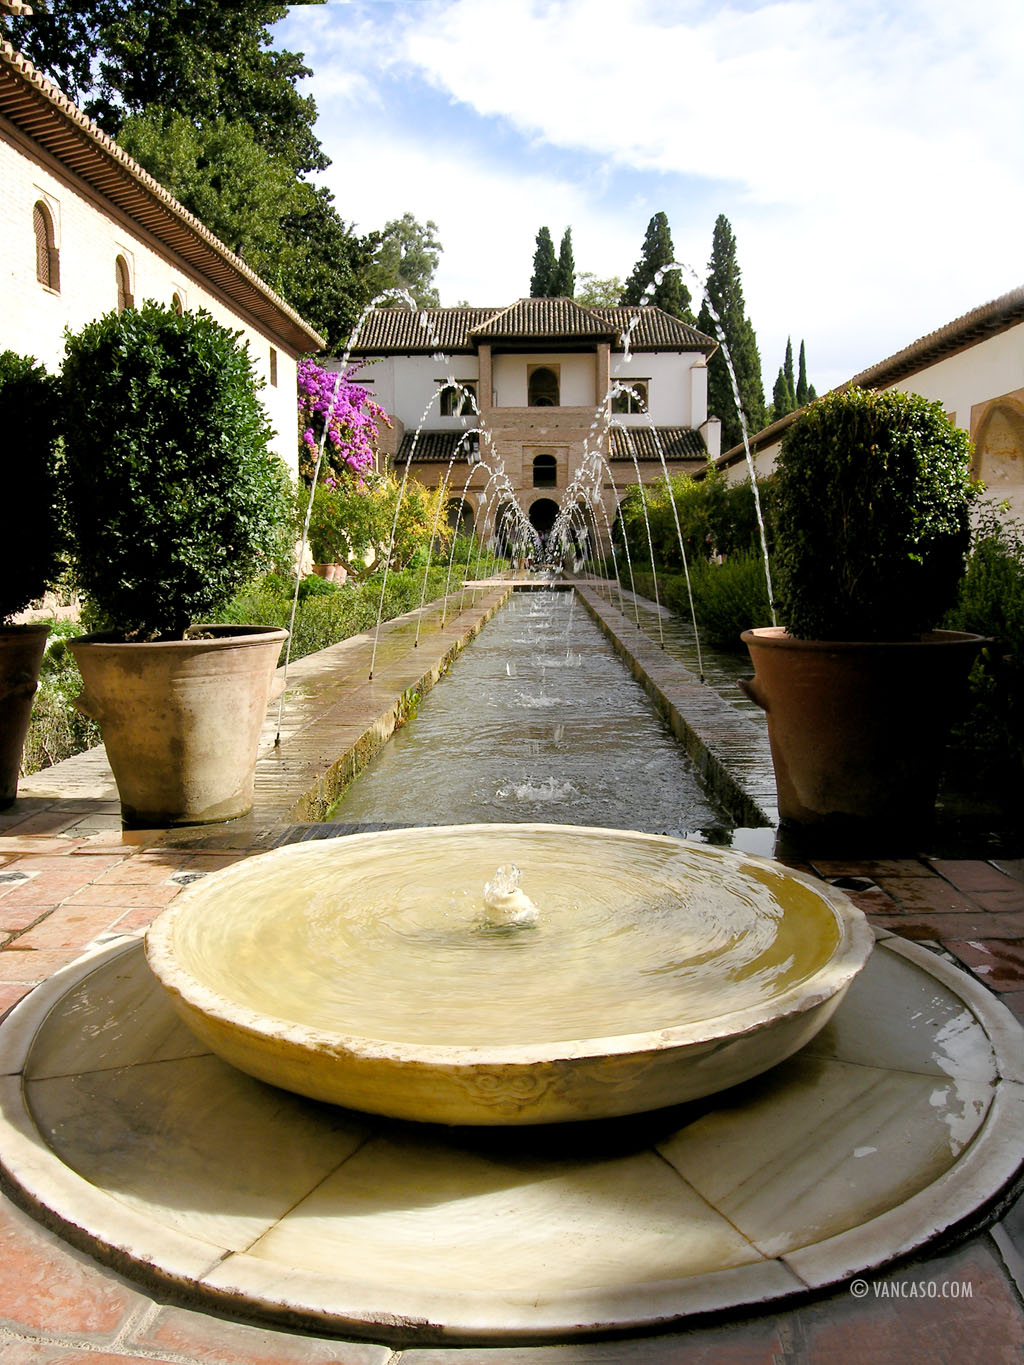 Gardens at the Alhambra in Granada Spain, photo by Vange